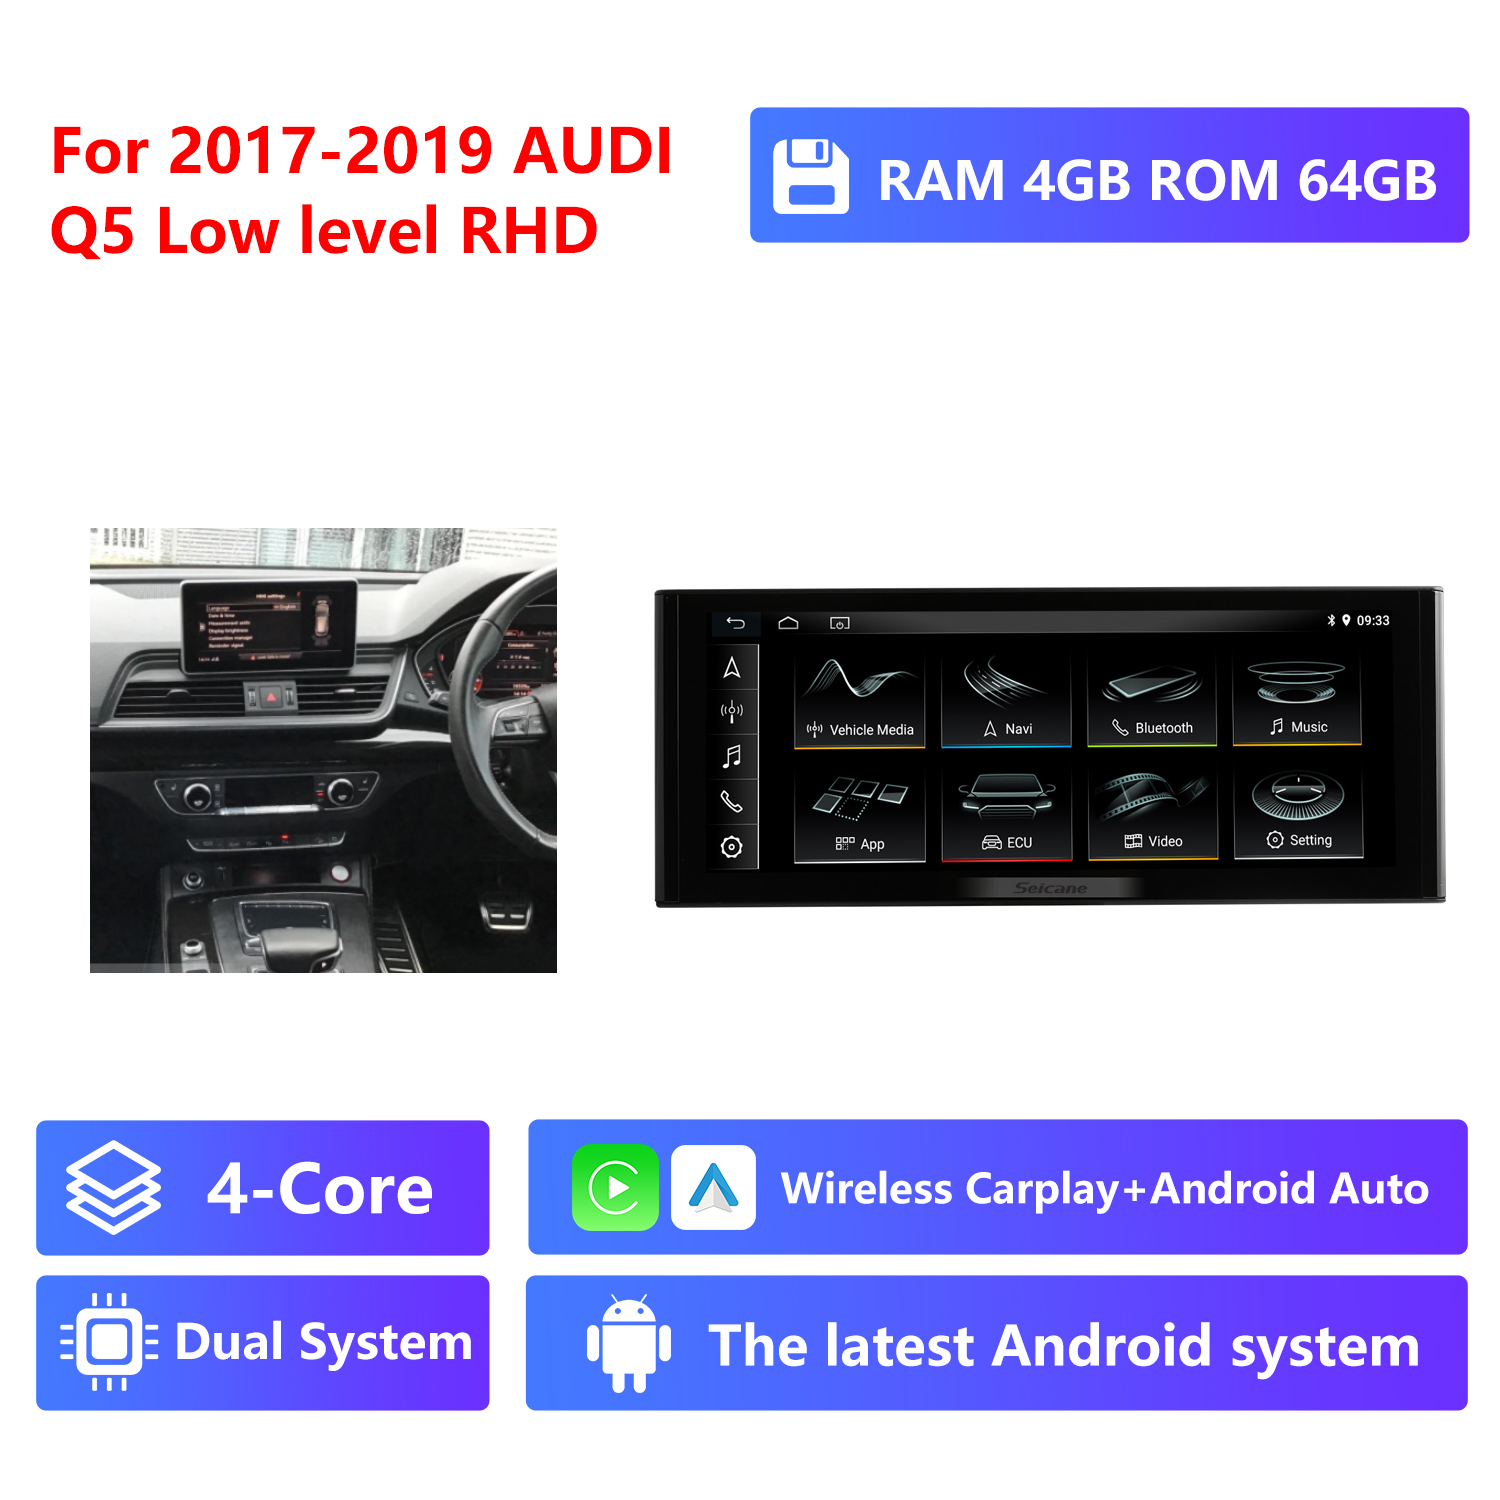 4-Core RAM 4G ROM 64G,2017-2019,Low version,RHD